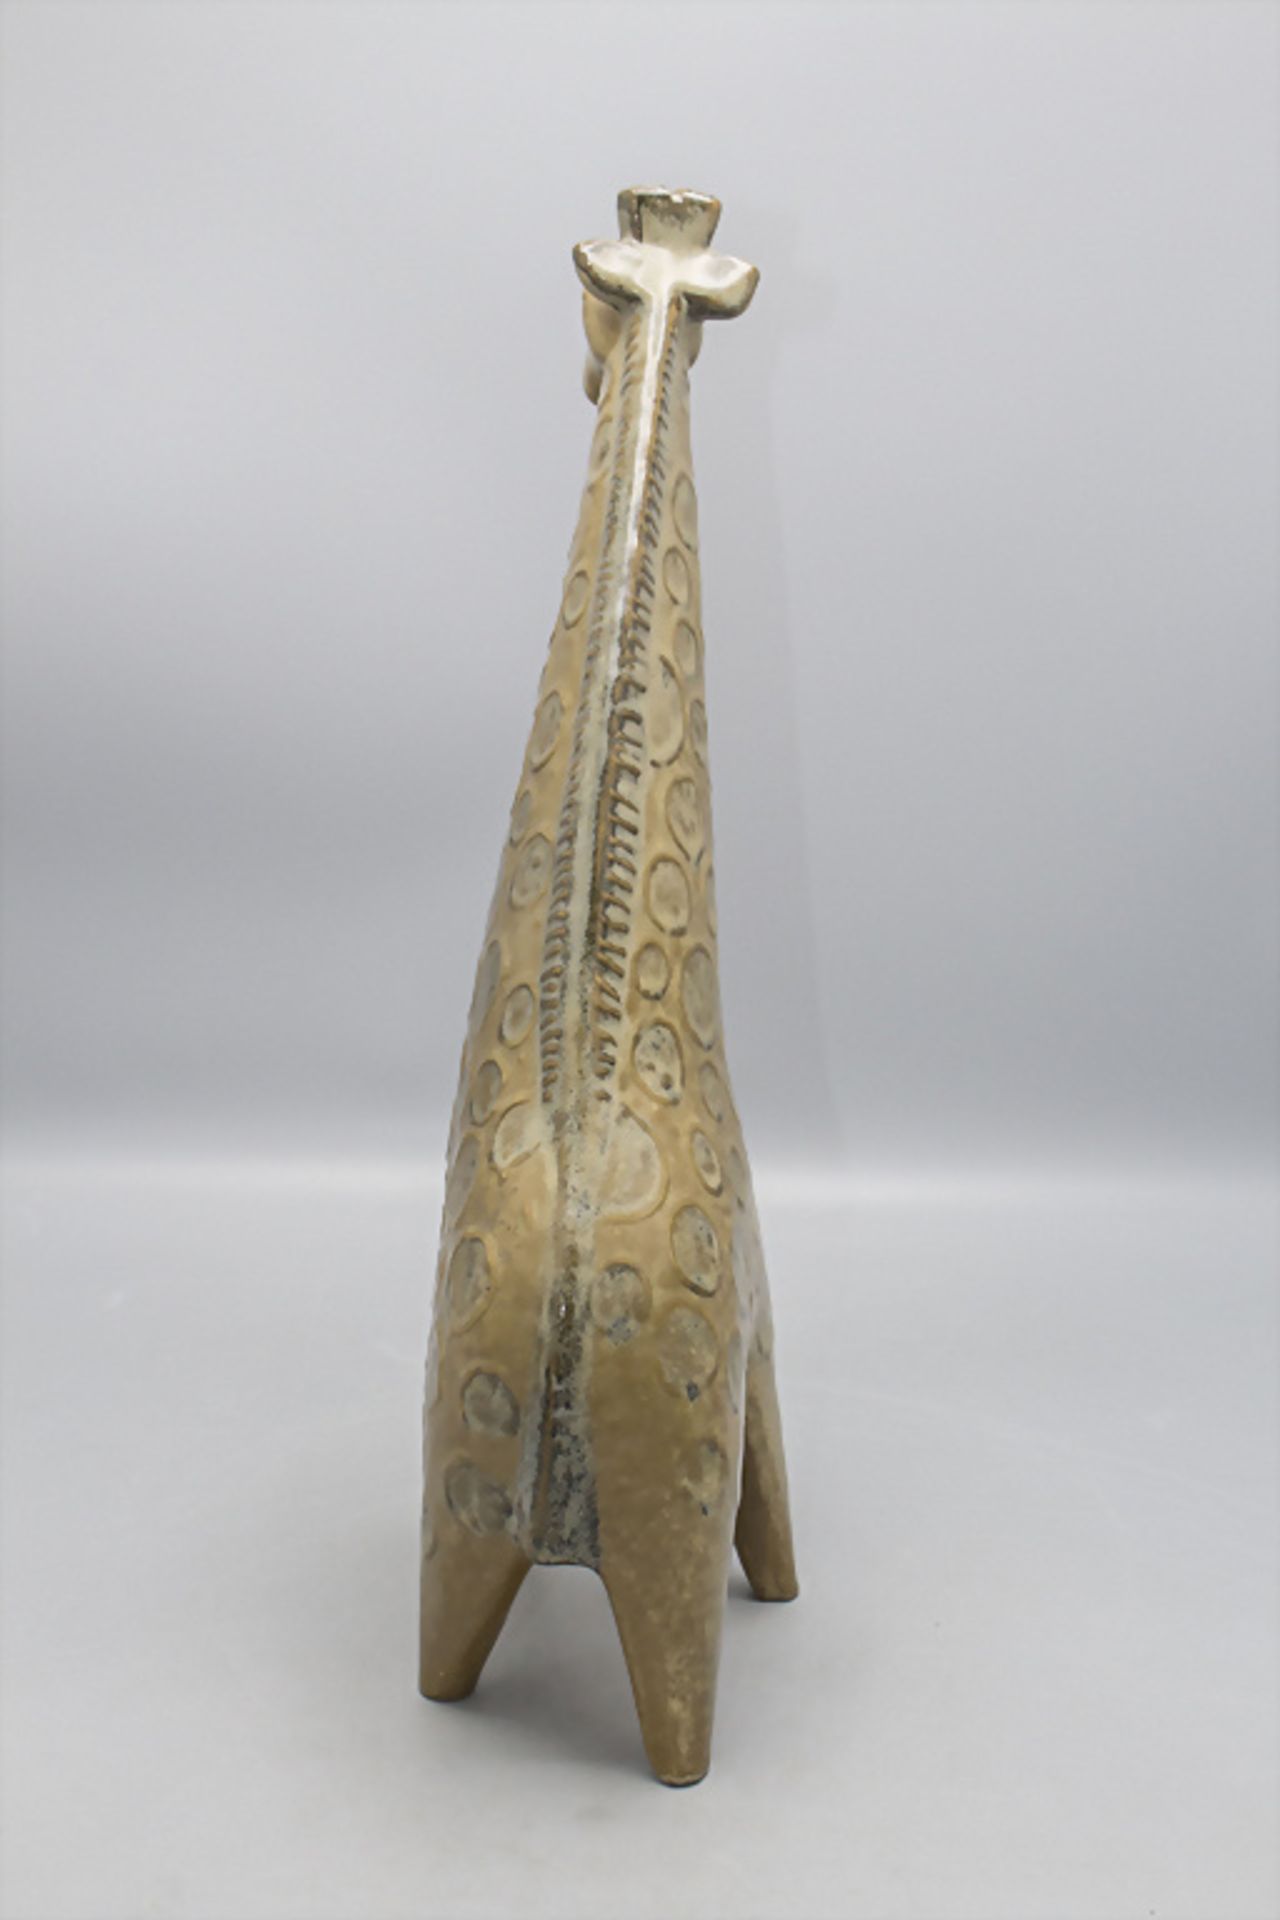 Lisa LARSON (*1931), Skulptur 'Giraffe', aus der Serie 'Noahs Ark' (Noaha Arche), Gustavsberg, ... - Bild 3 aus 6